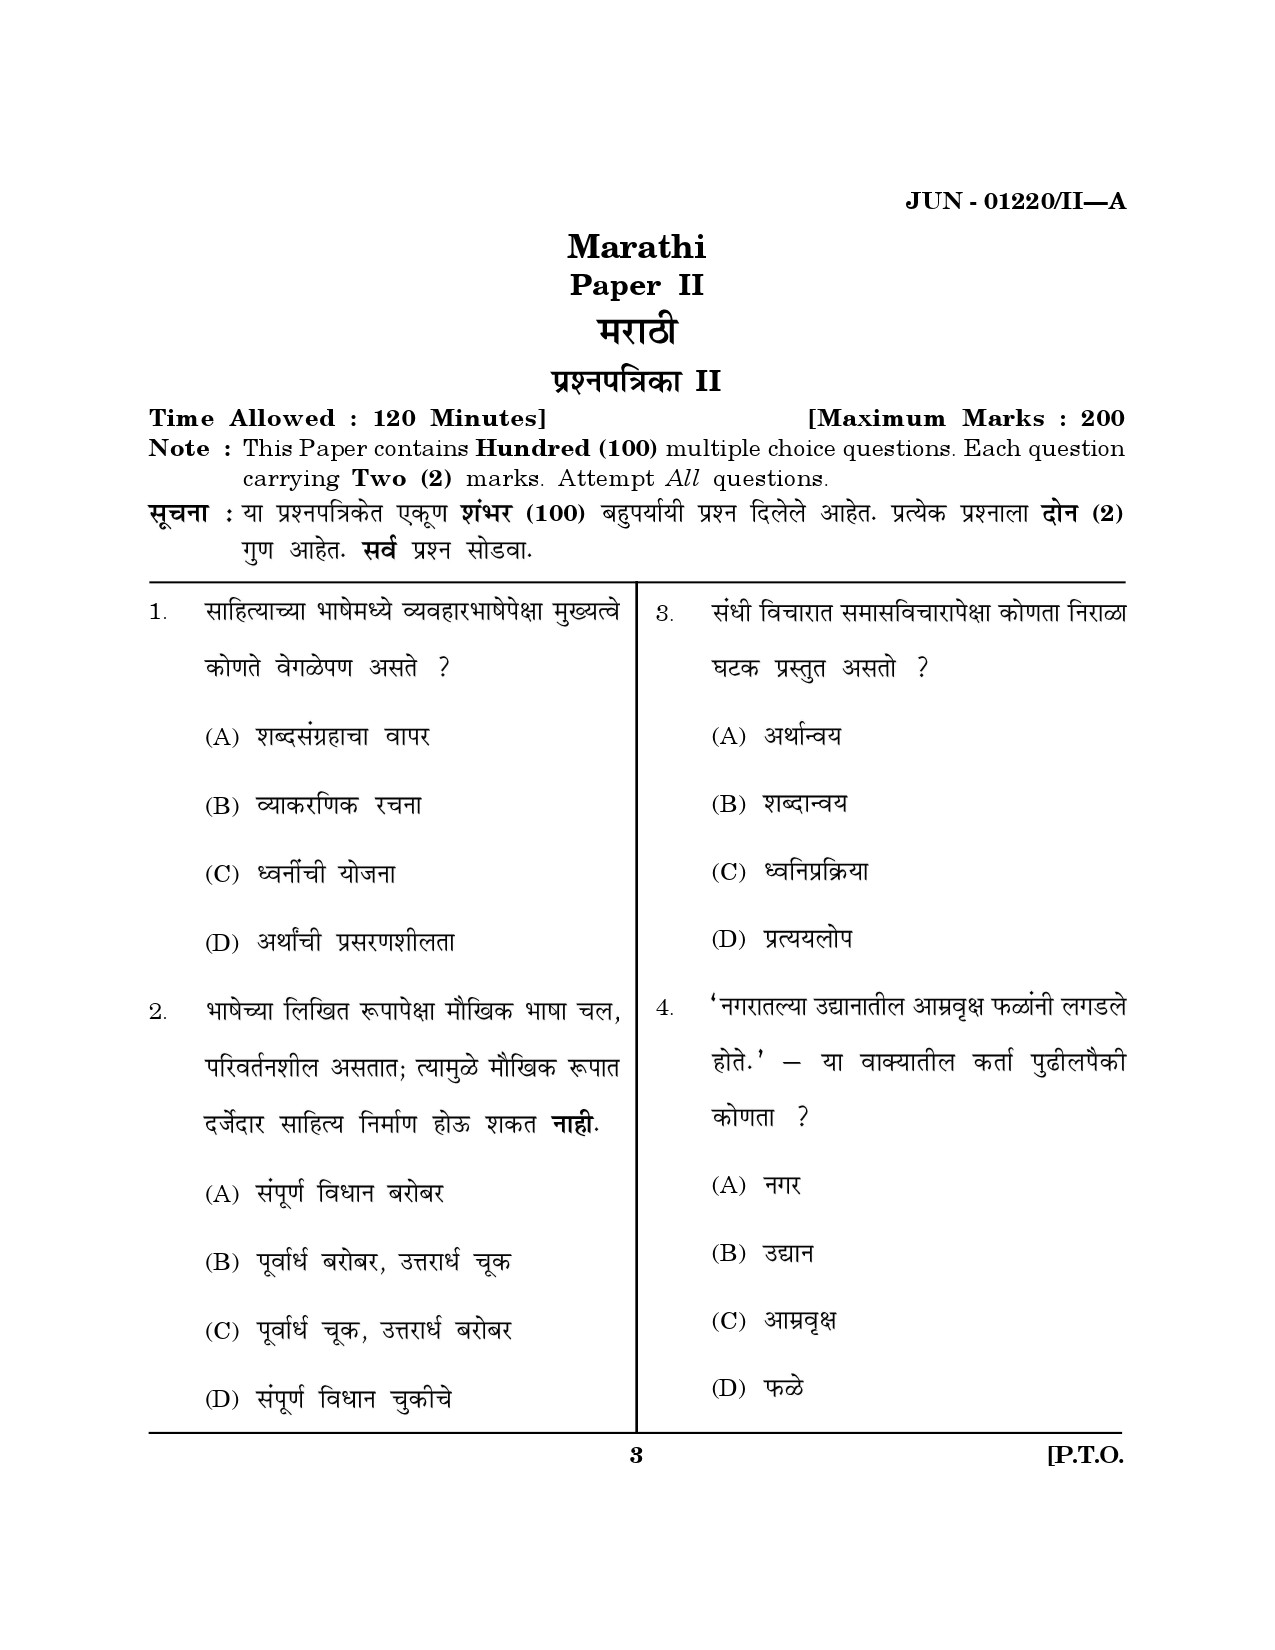 Maharashtra SET Marathi Question Paper II June 2020 2